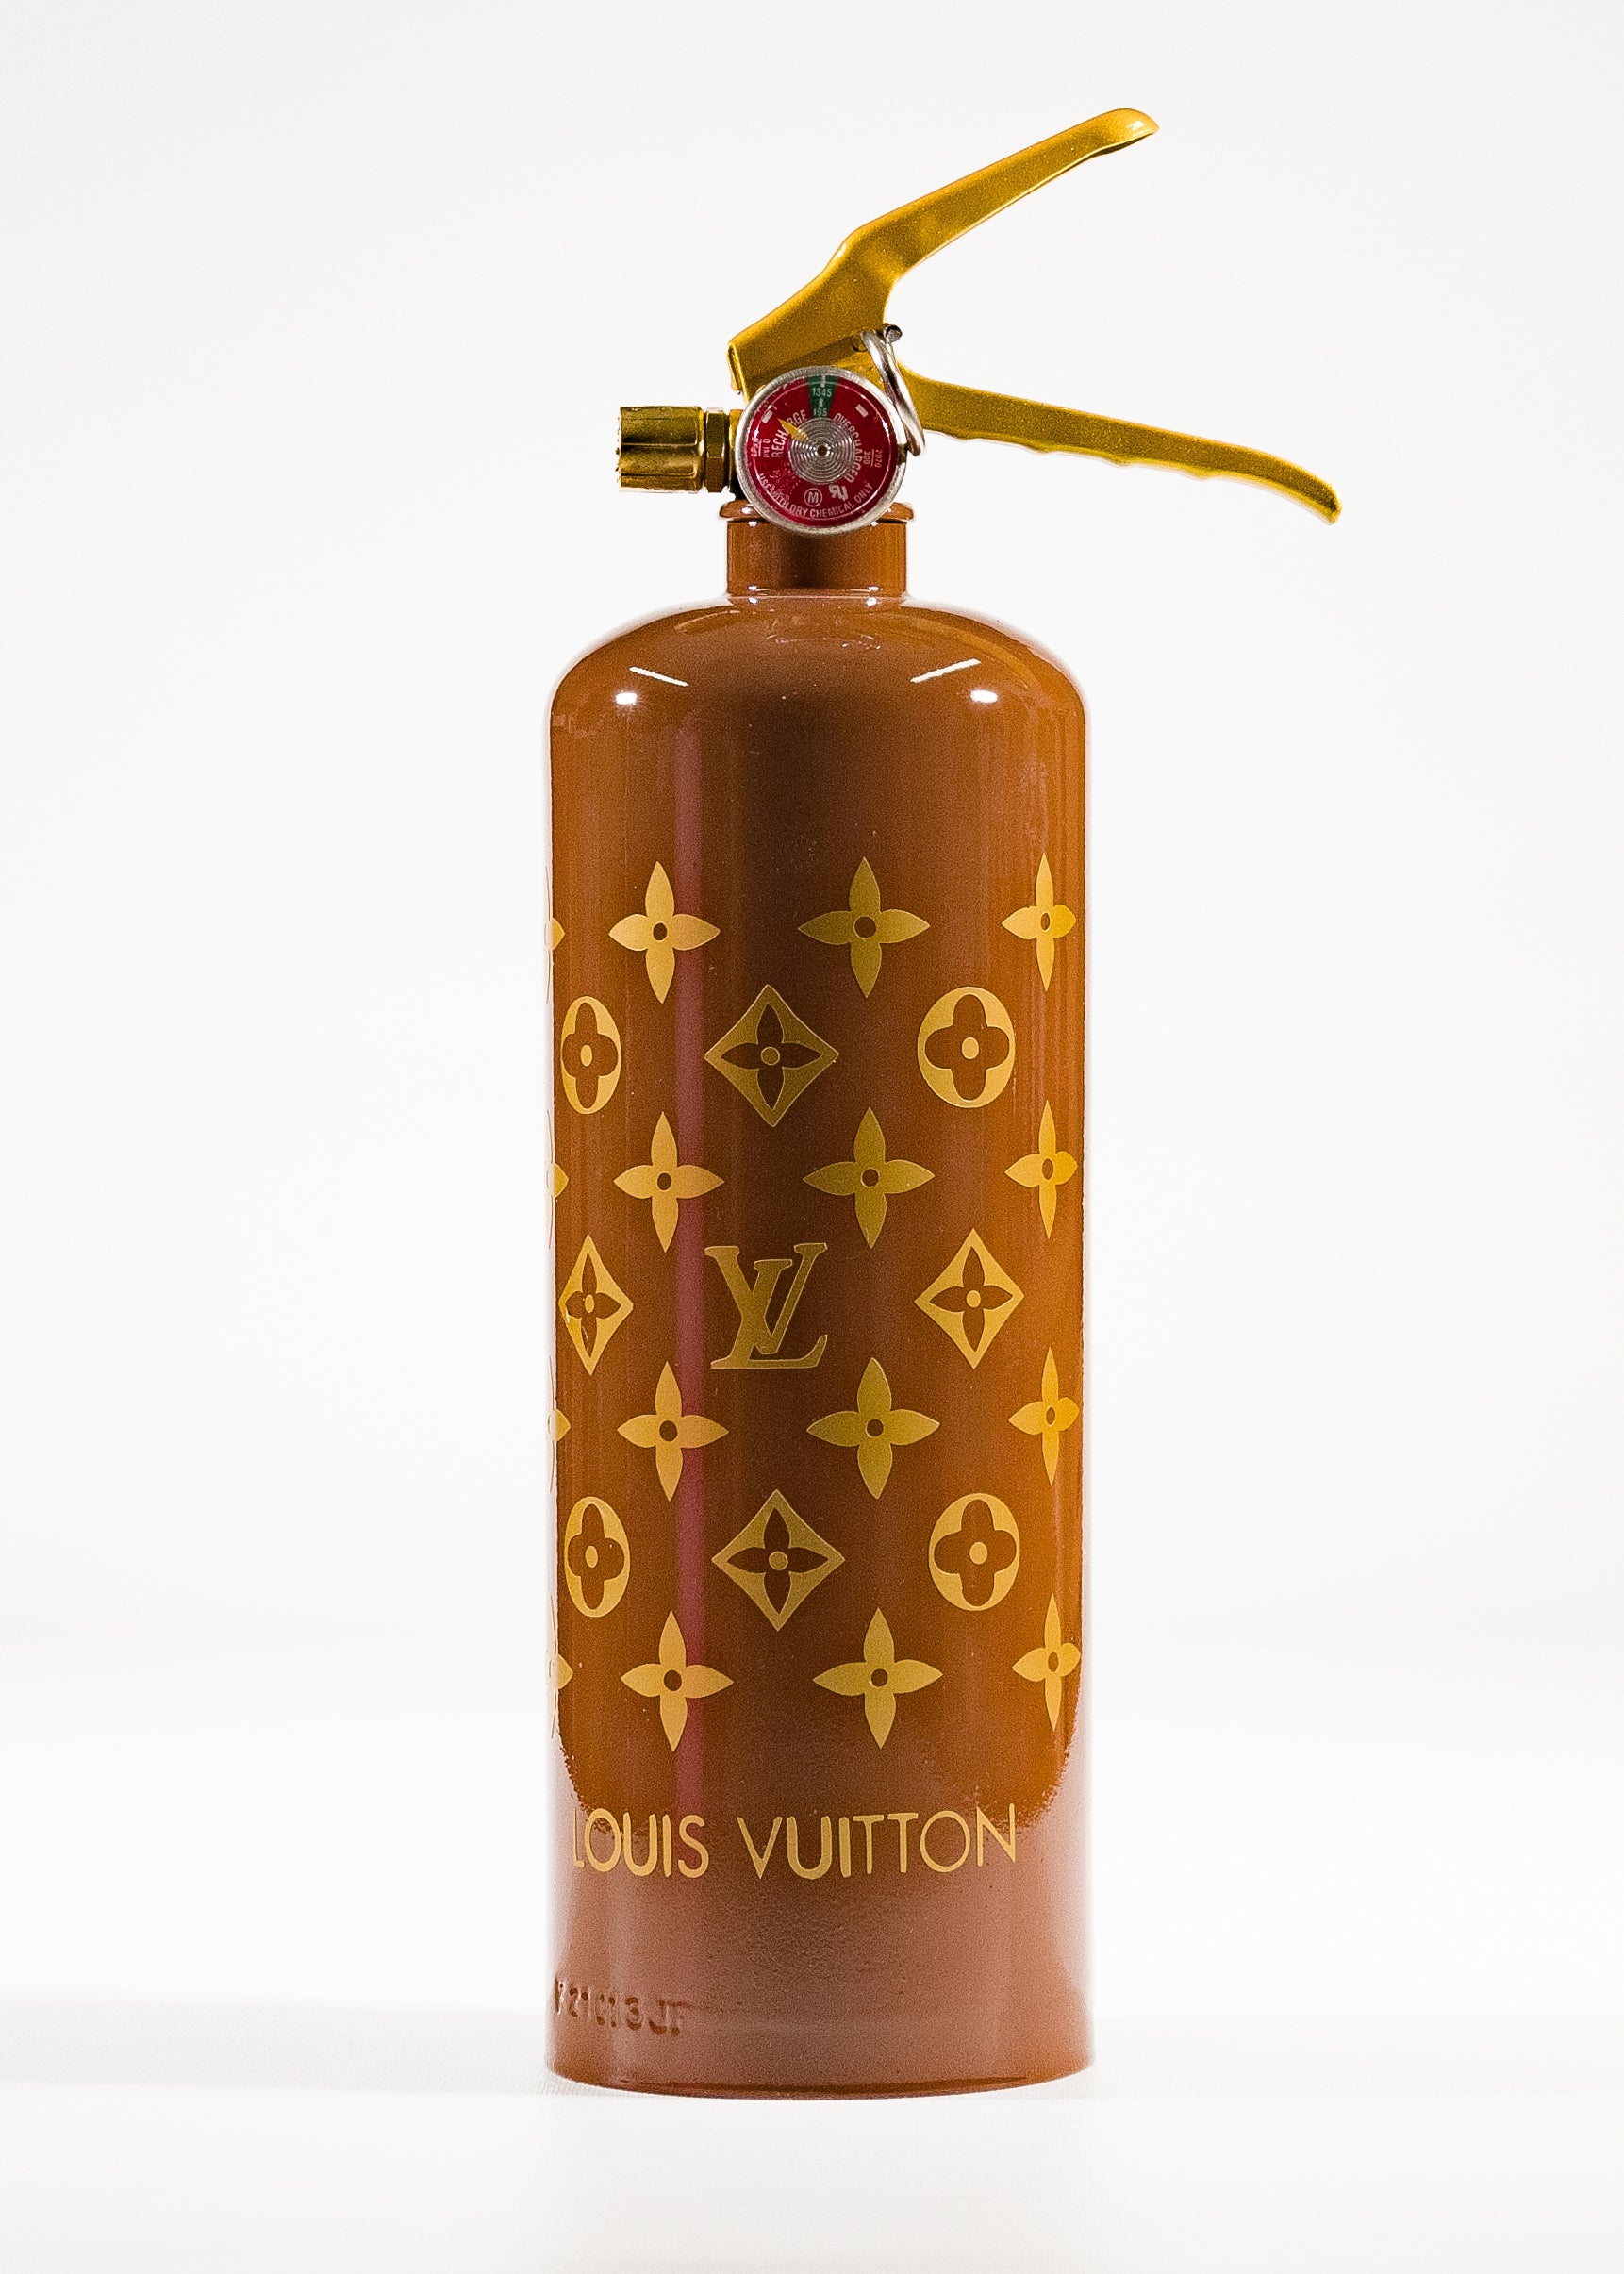 Louis Vuitton - Gold Bar by David Mir